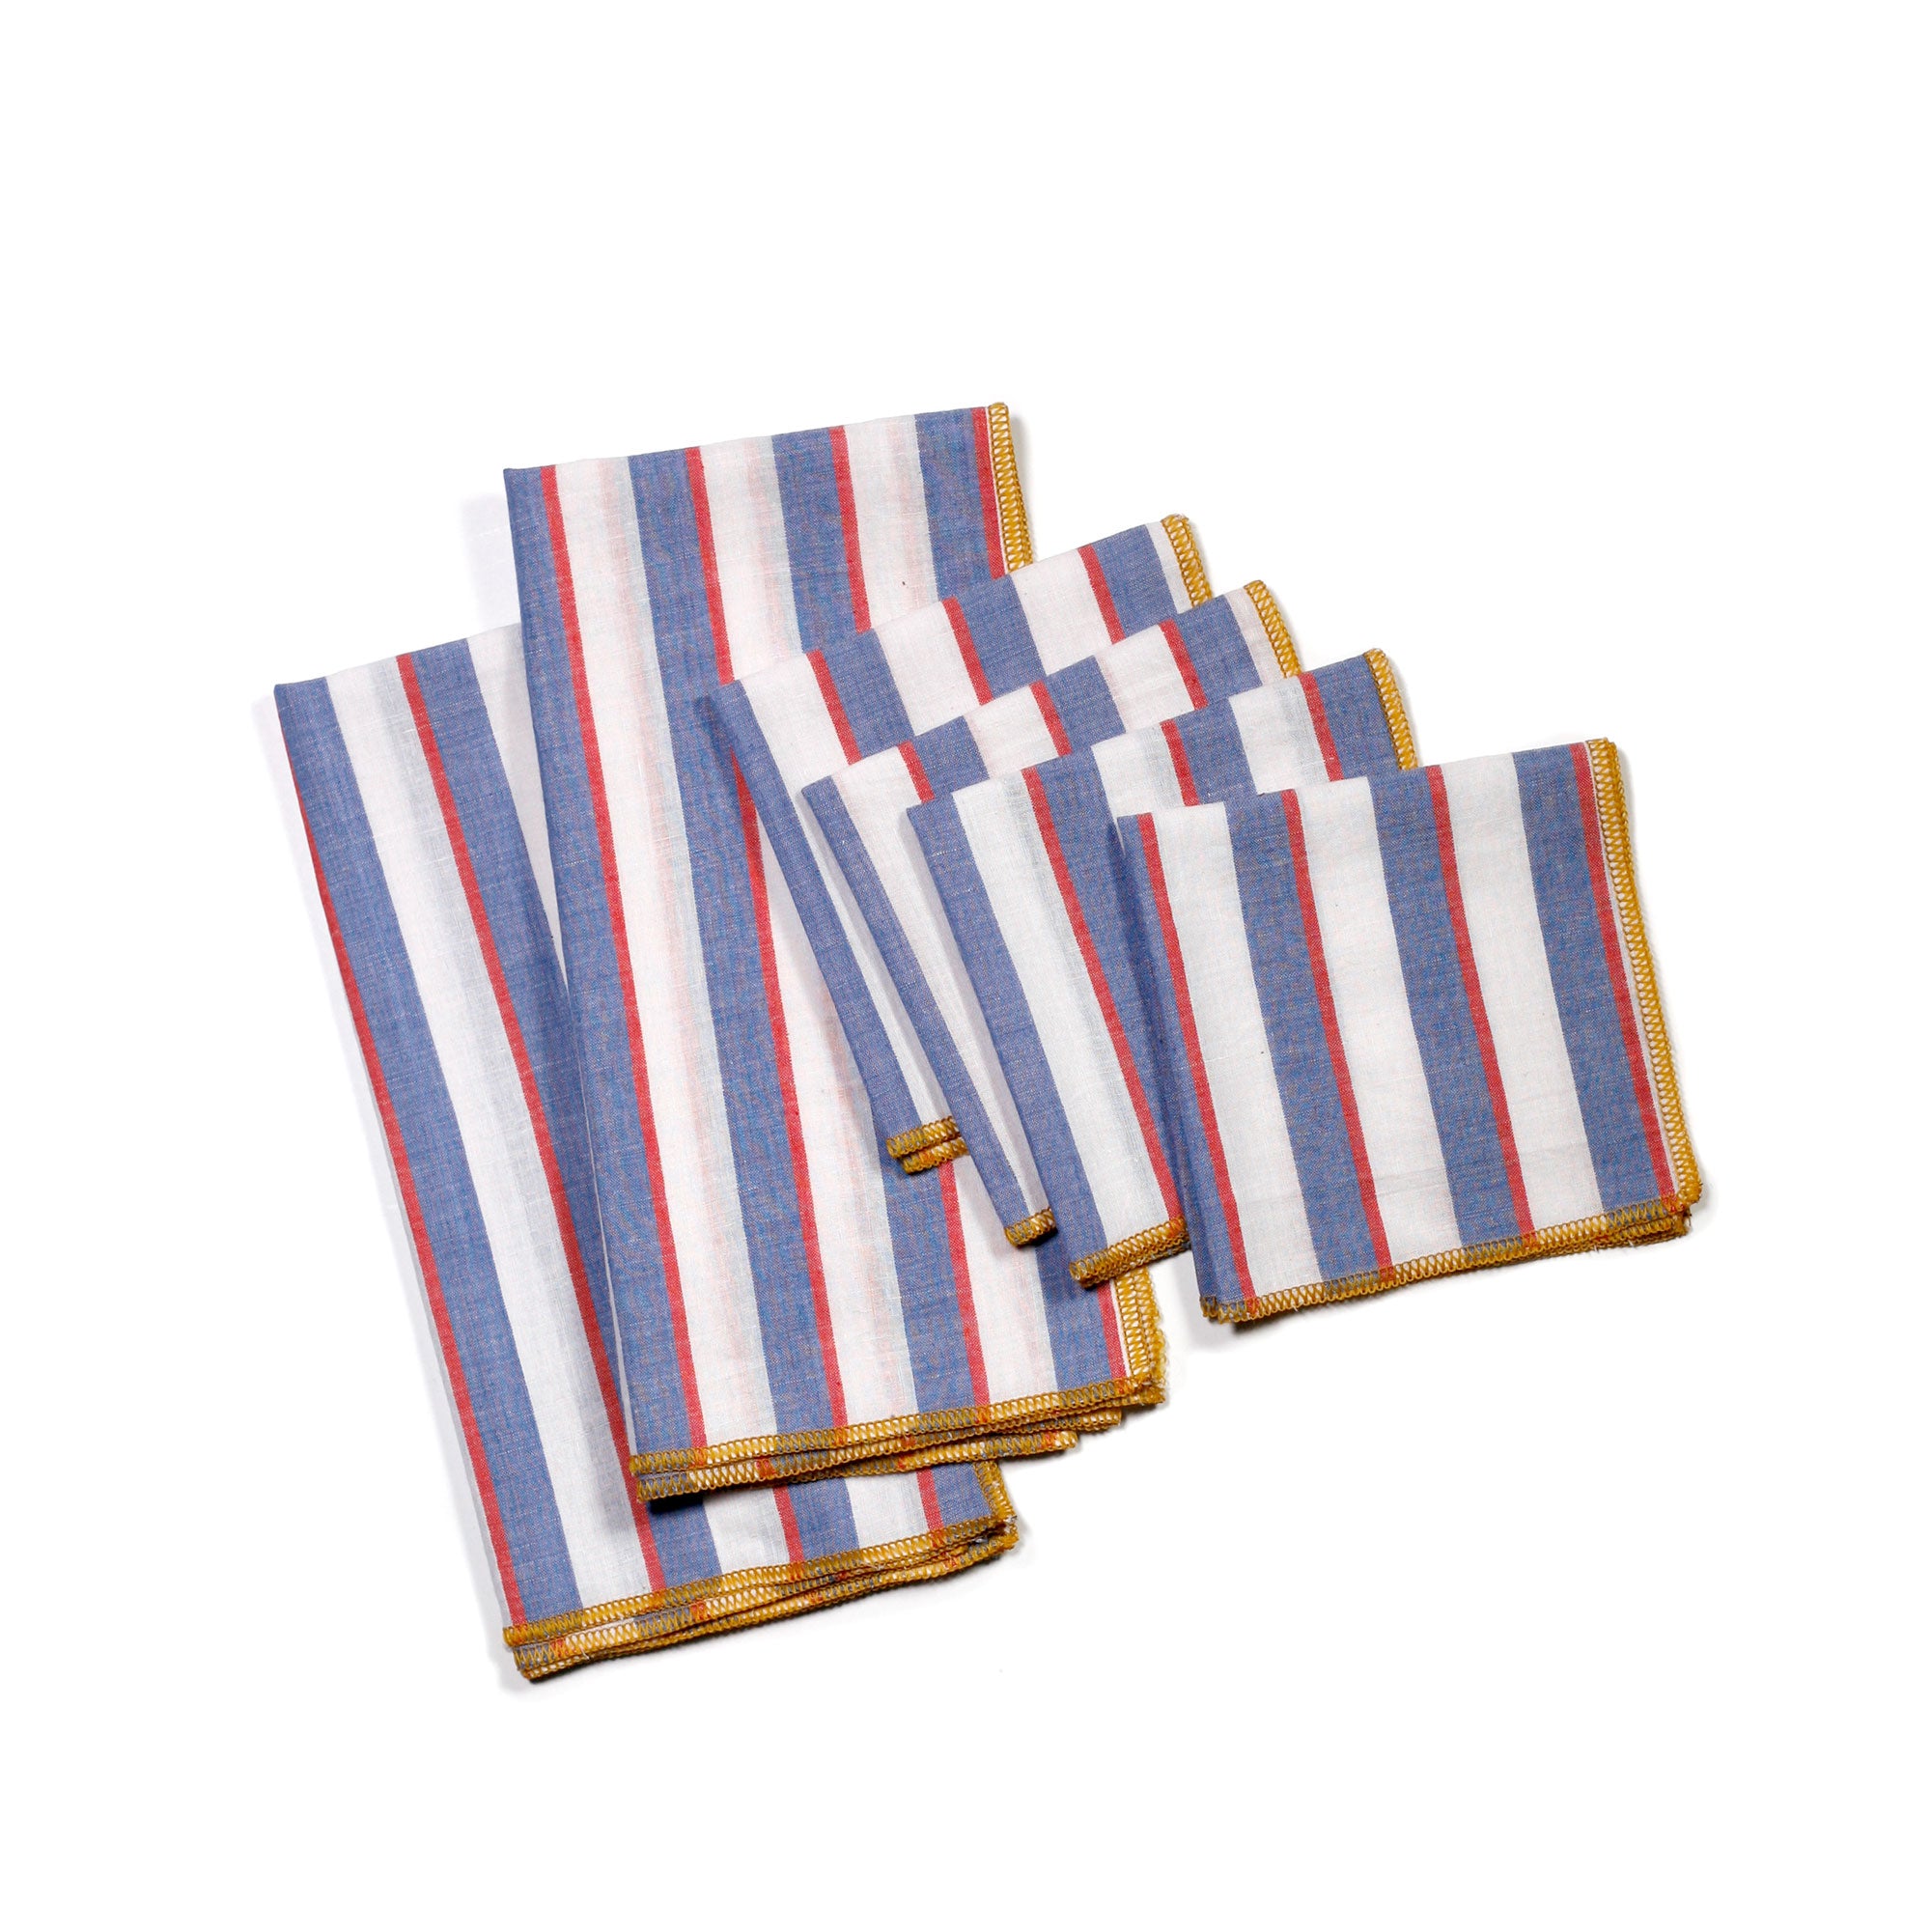 Mondrian Primary Colors Striped Cocktail Napkins, Set of 4